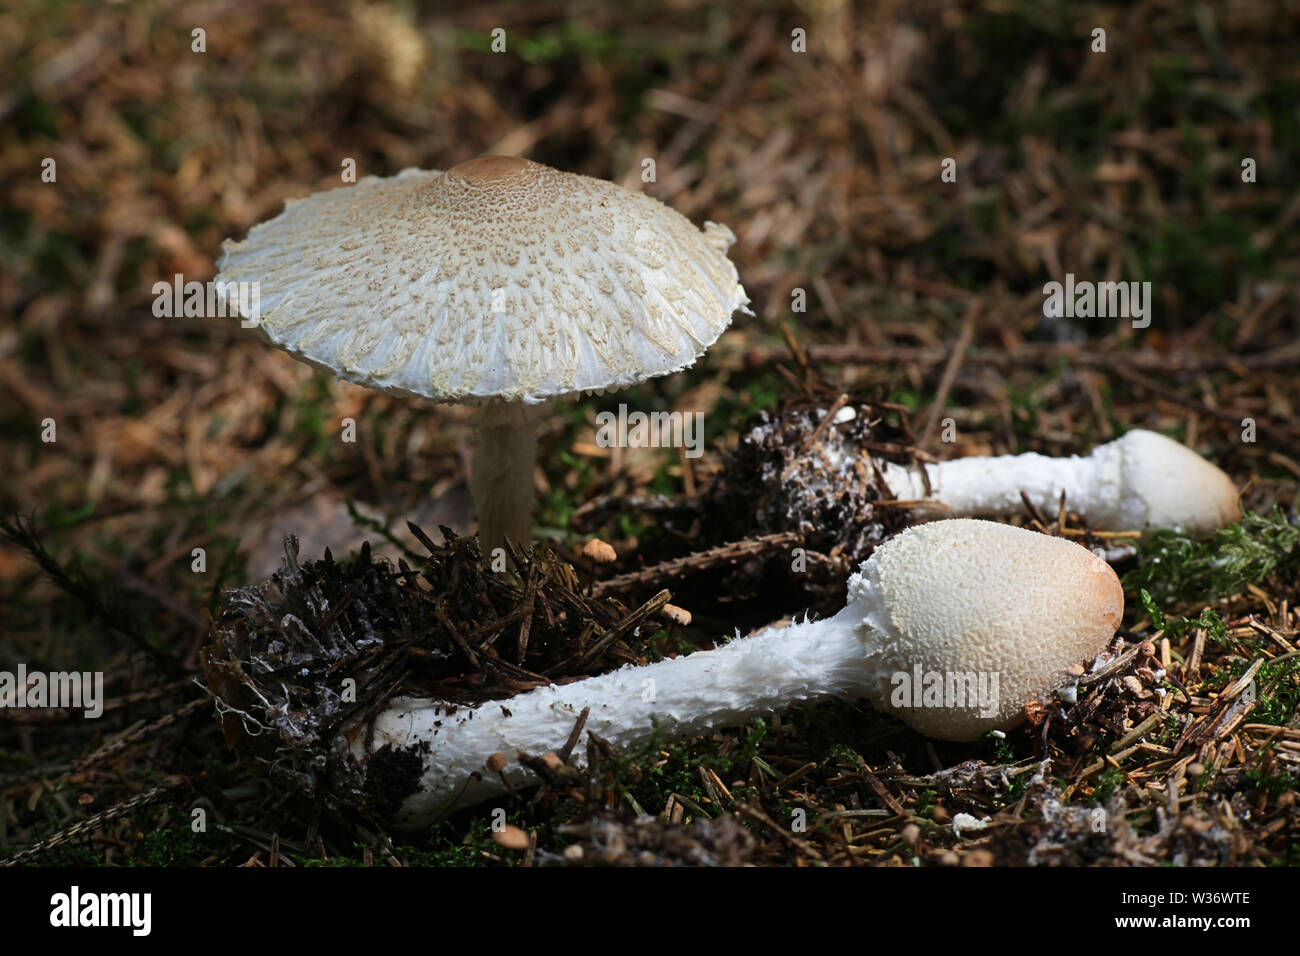 Lepiota clypeolaria, bekannt als der Schirm dapperling oder der shaggy - angepirscht Lepiota, wilde Pilze aus Finnland Stockfoto